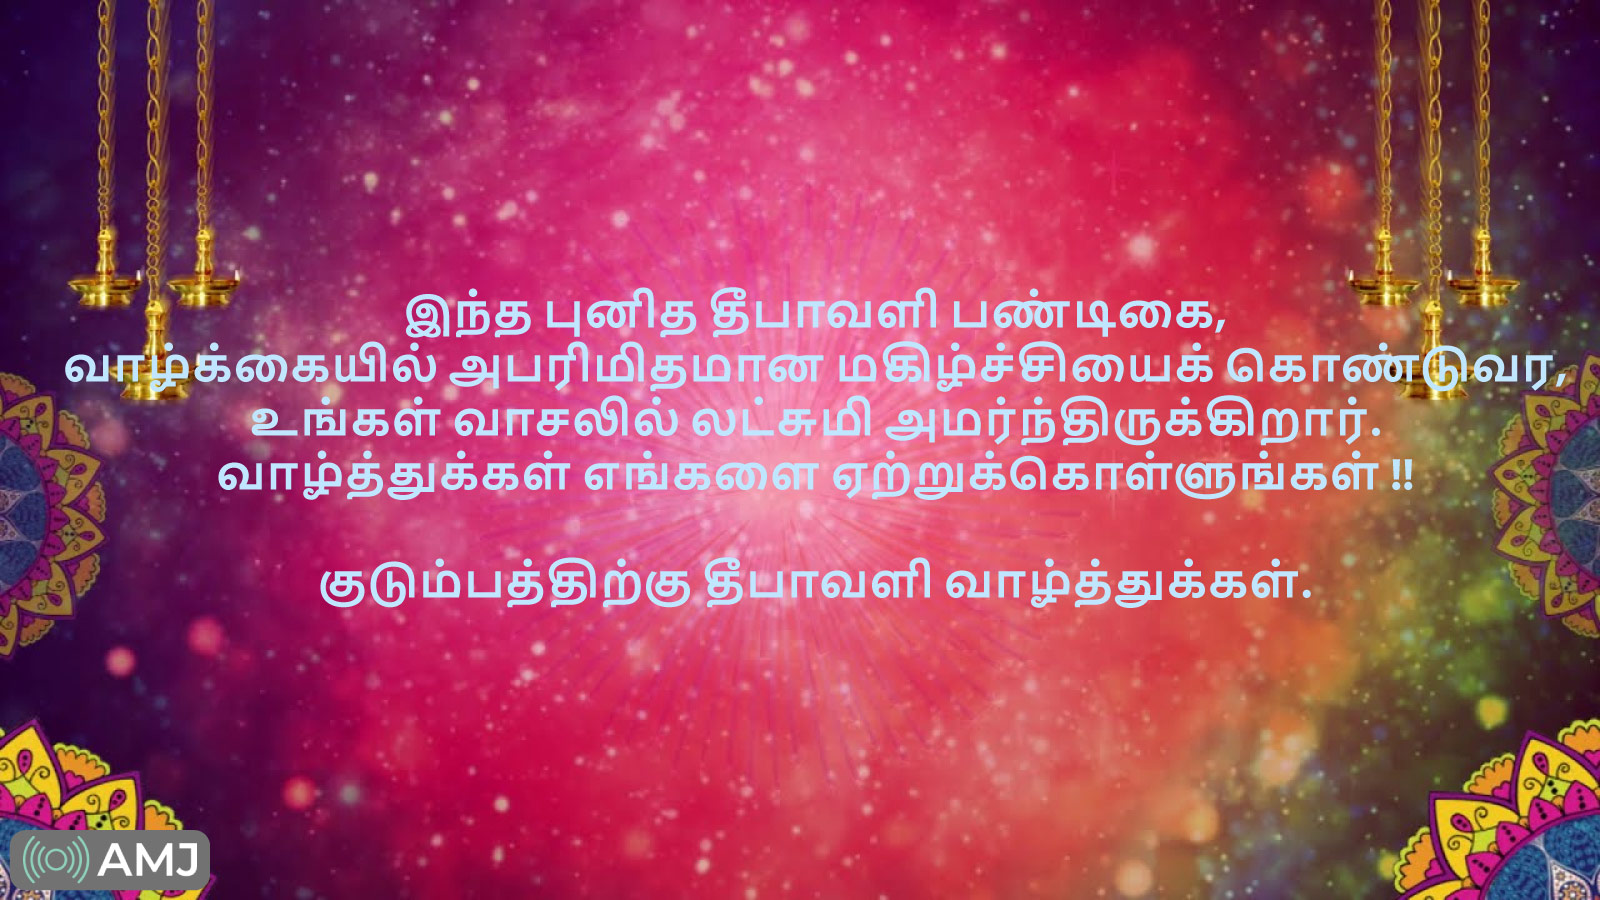 Deepavali Wishes in Tamil